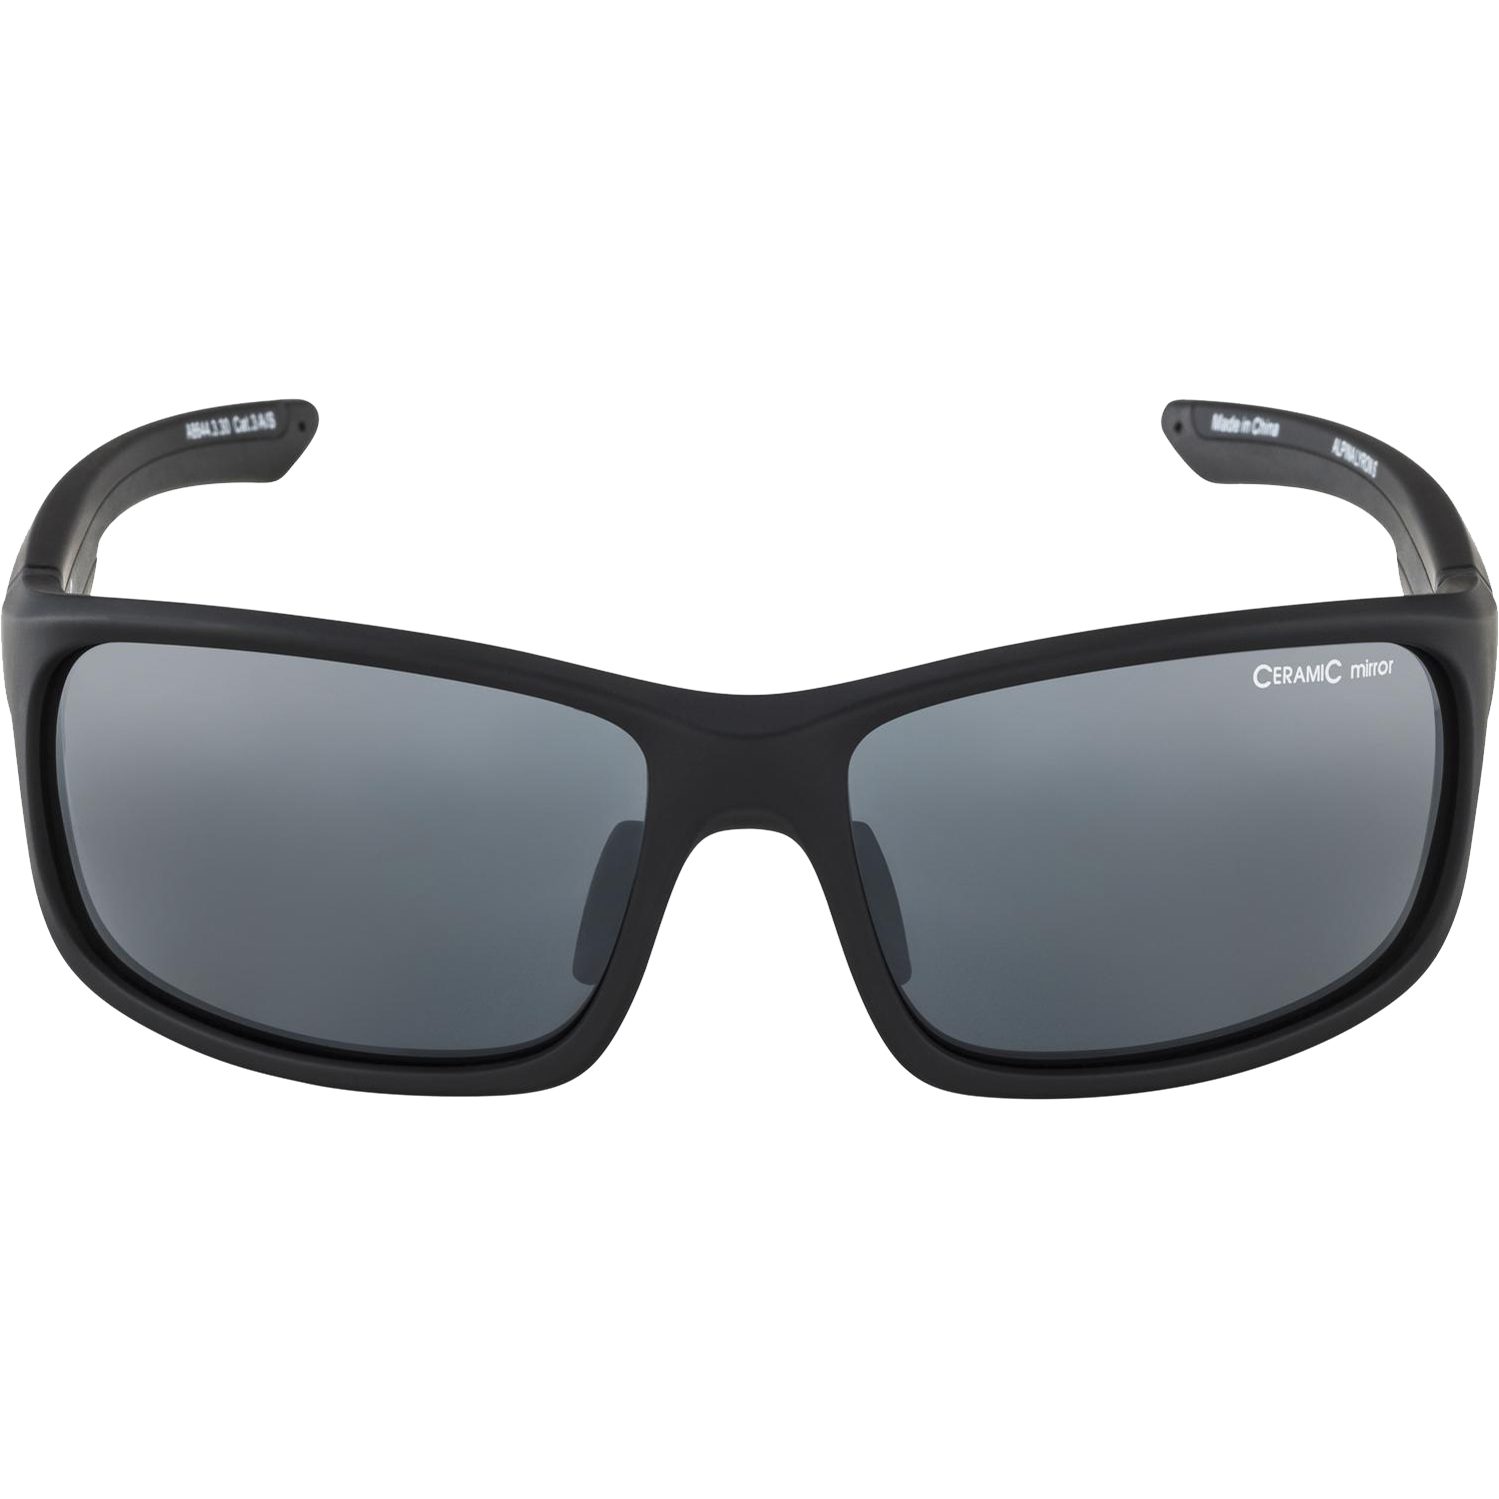 Lyron S Sonnenbrille black matt